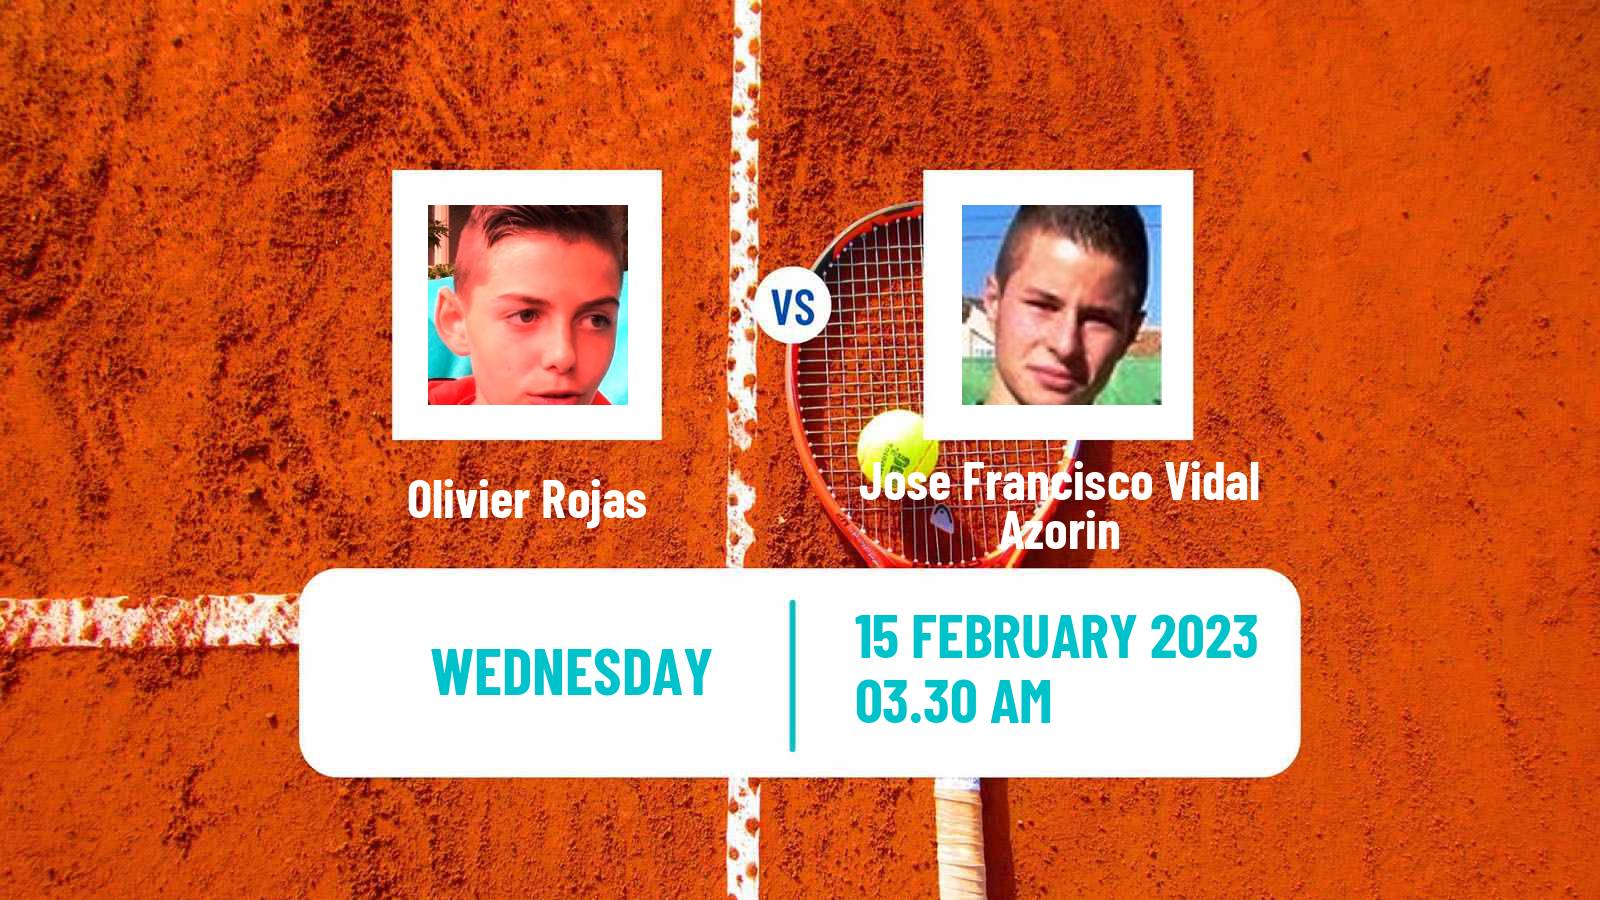 Tennis ITF Tournaments Olivier Rojas - Jose Francisco Vidal Azorin